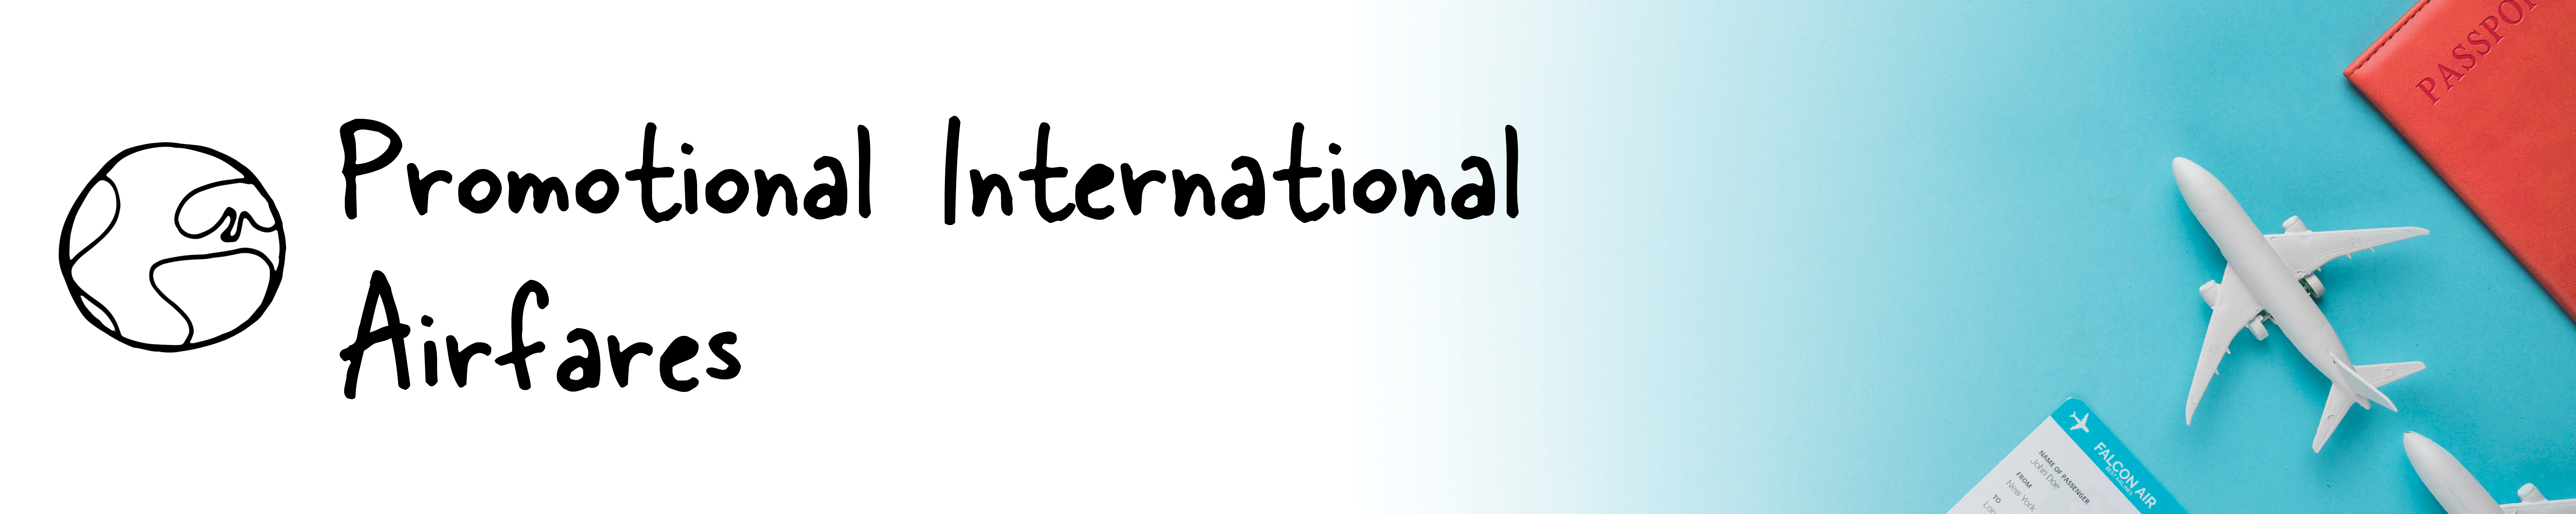 Promotional International Airfares